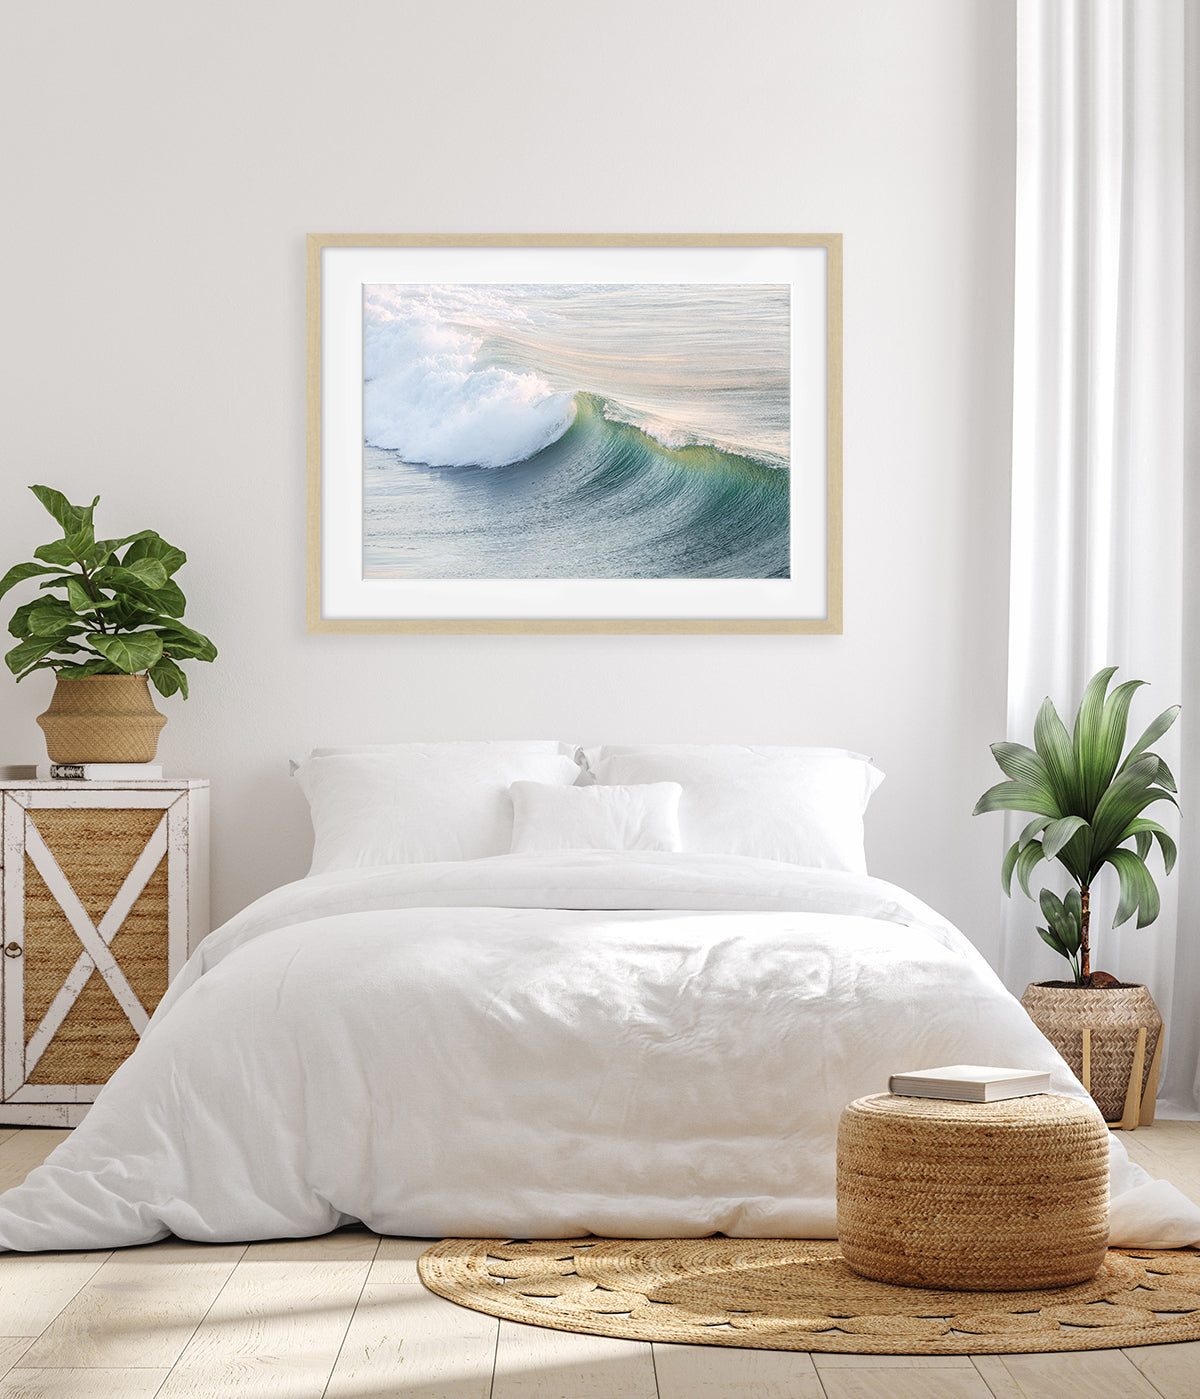 coastal bedroom decor with framed wave photograph